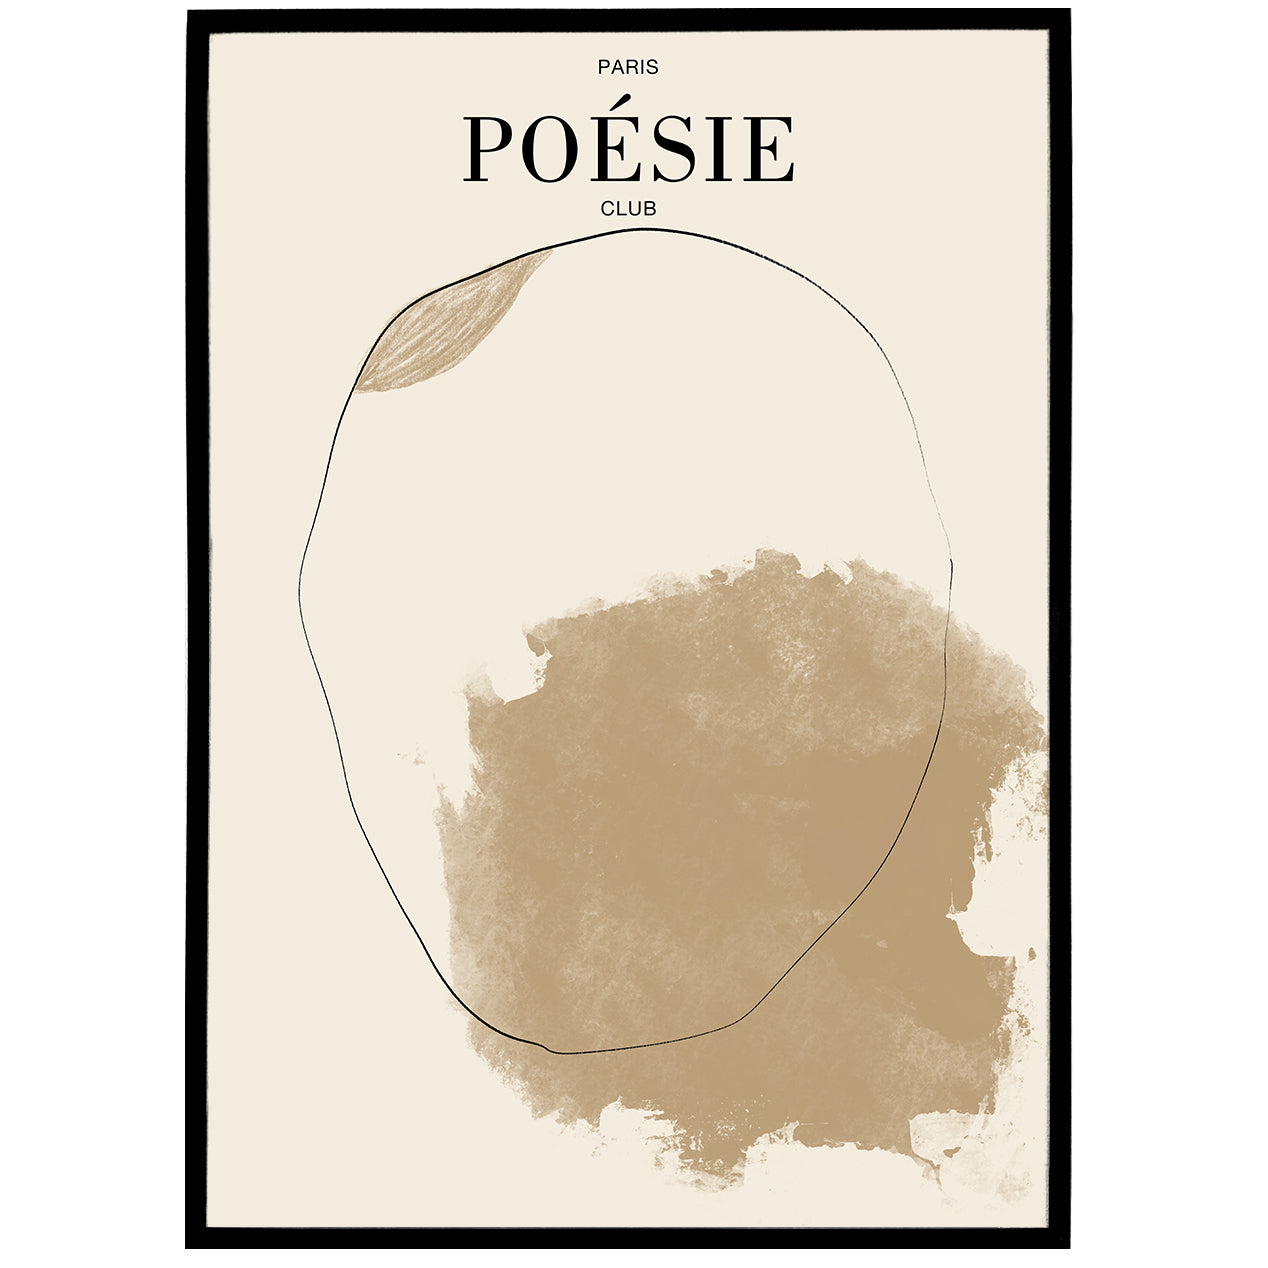 Abstract Minimalist Paris Poésie Club Poster